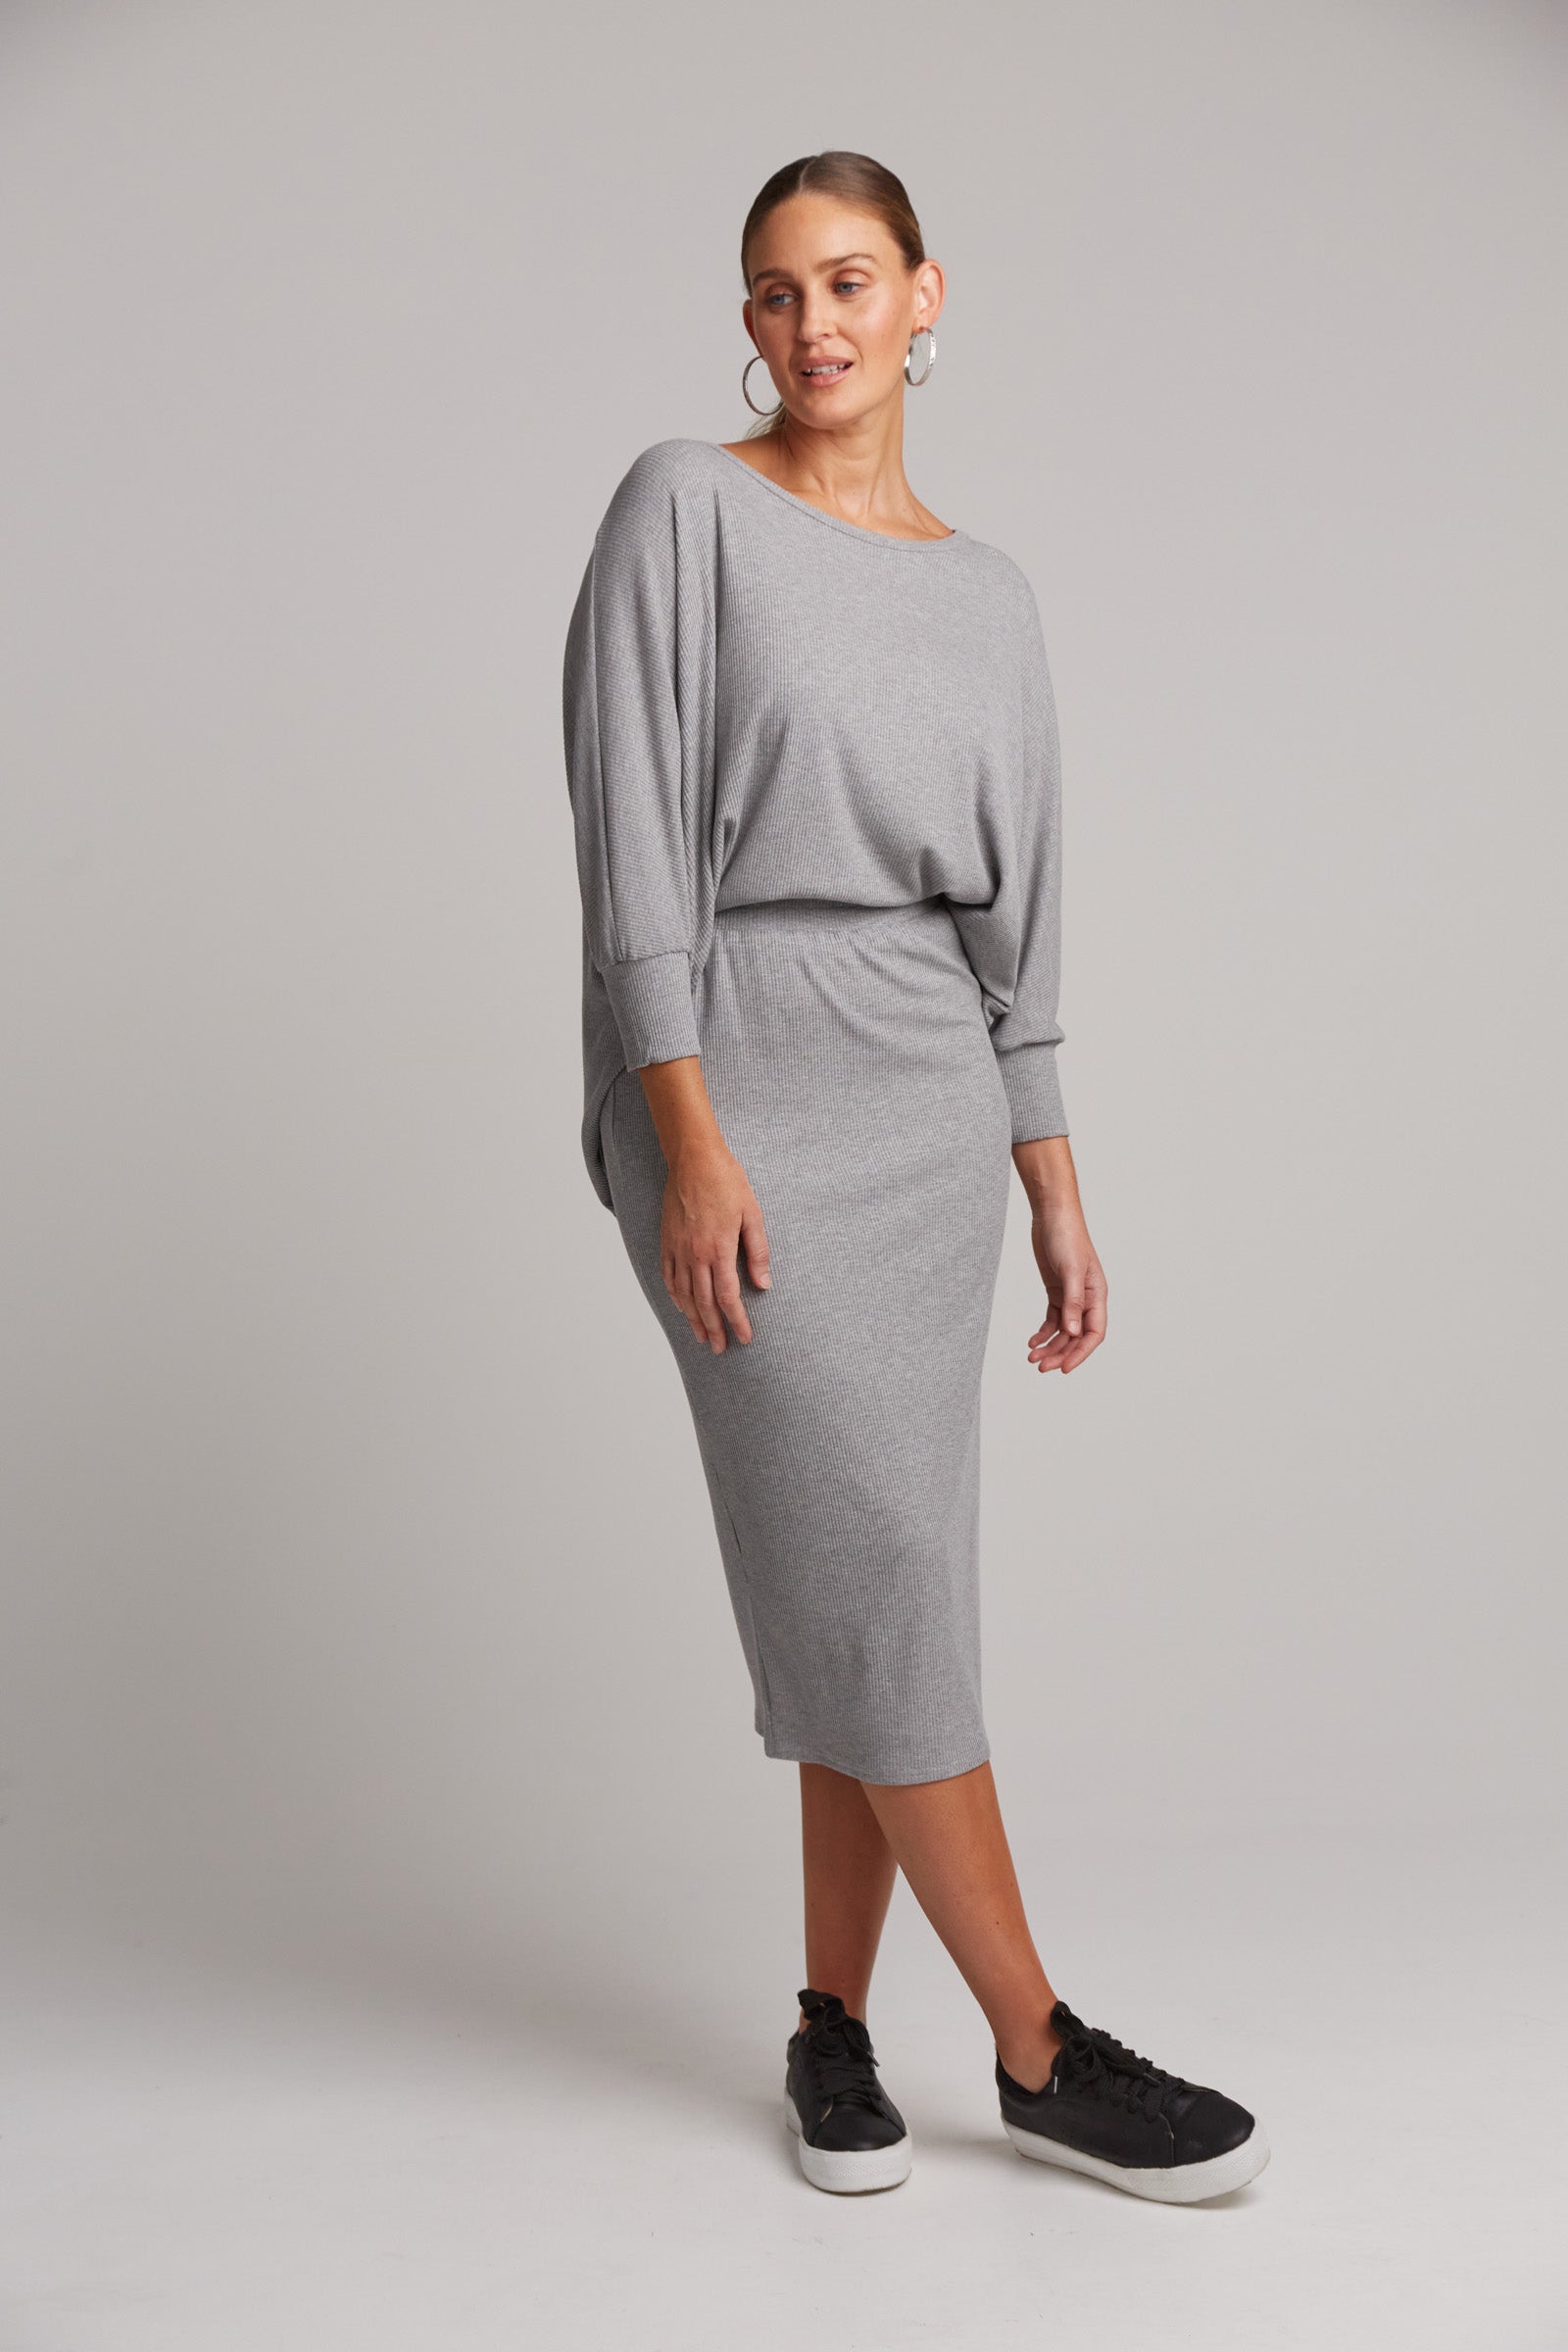 Studio Jersey Skirt - Gray - eb&ive Clothing - Skirt Mid